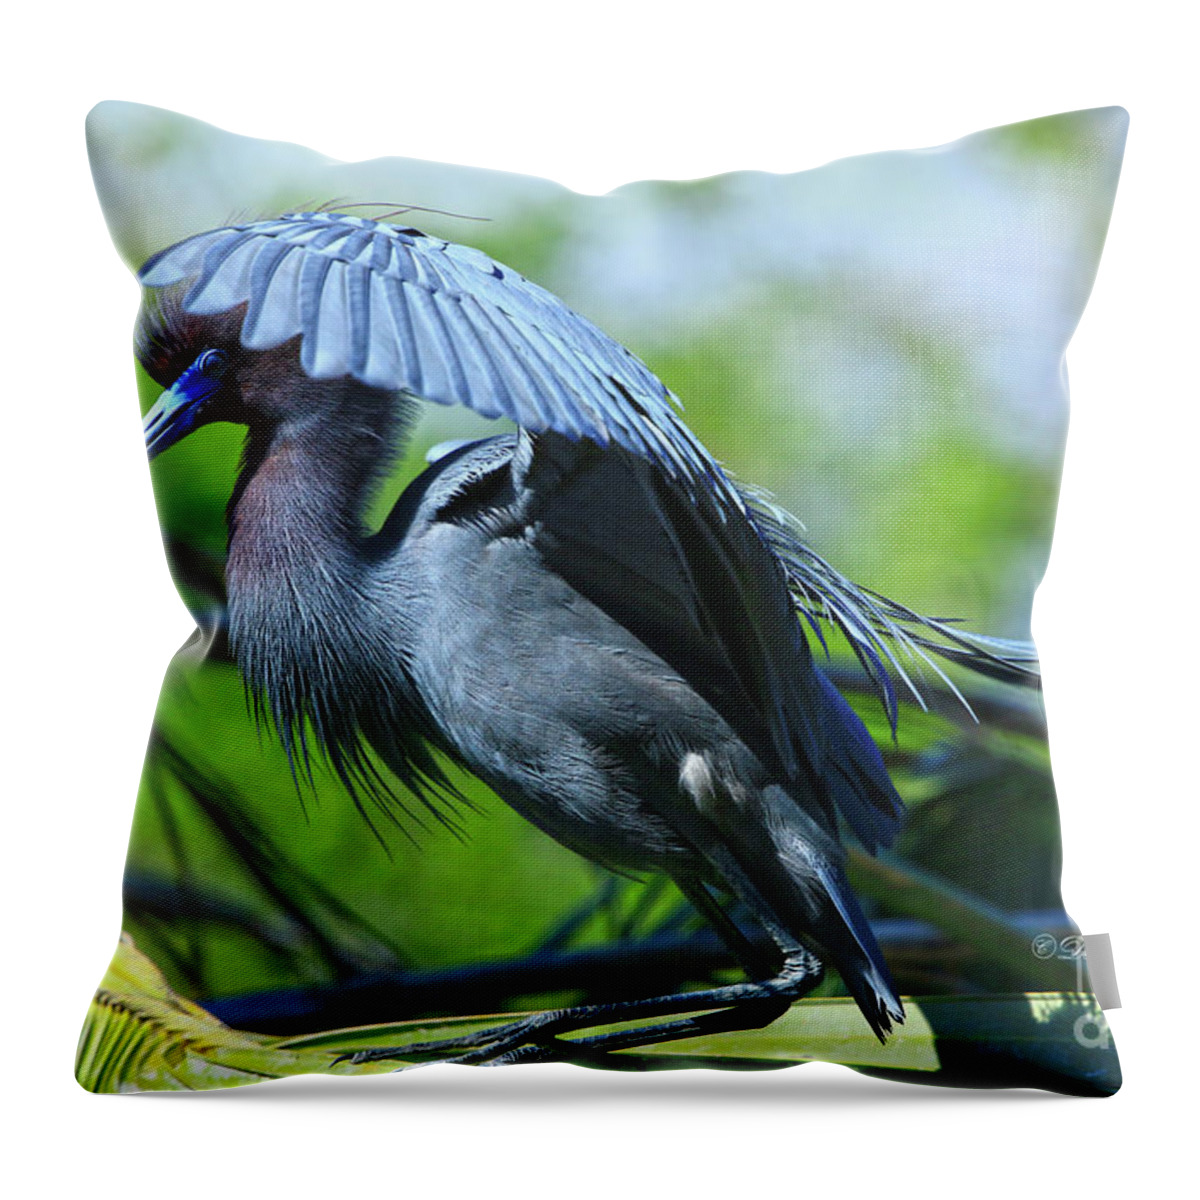 Heron Throw Pillow featuring the photograph Little Blue Heron Alligator Farm by Deborah Benoit